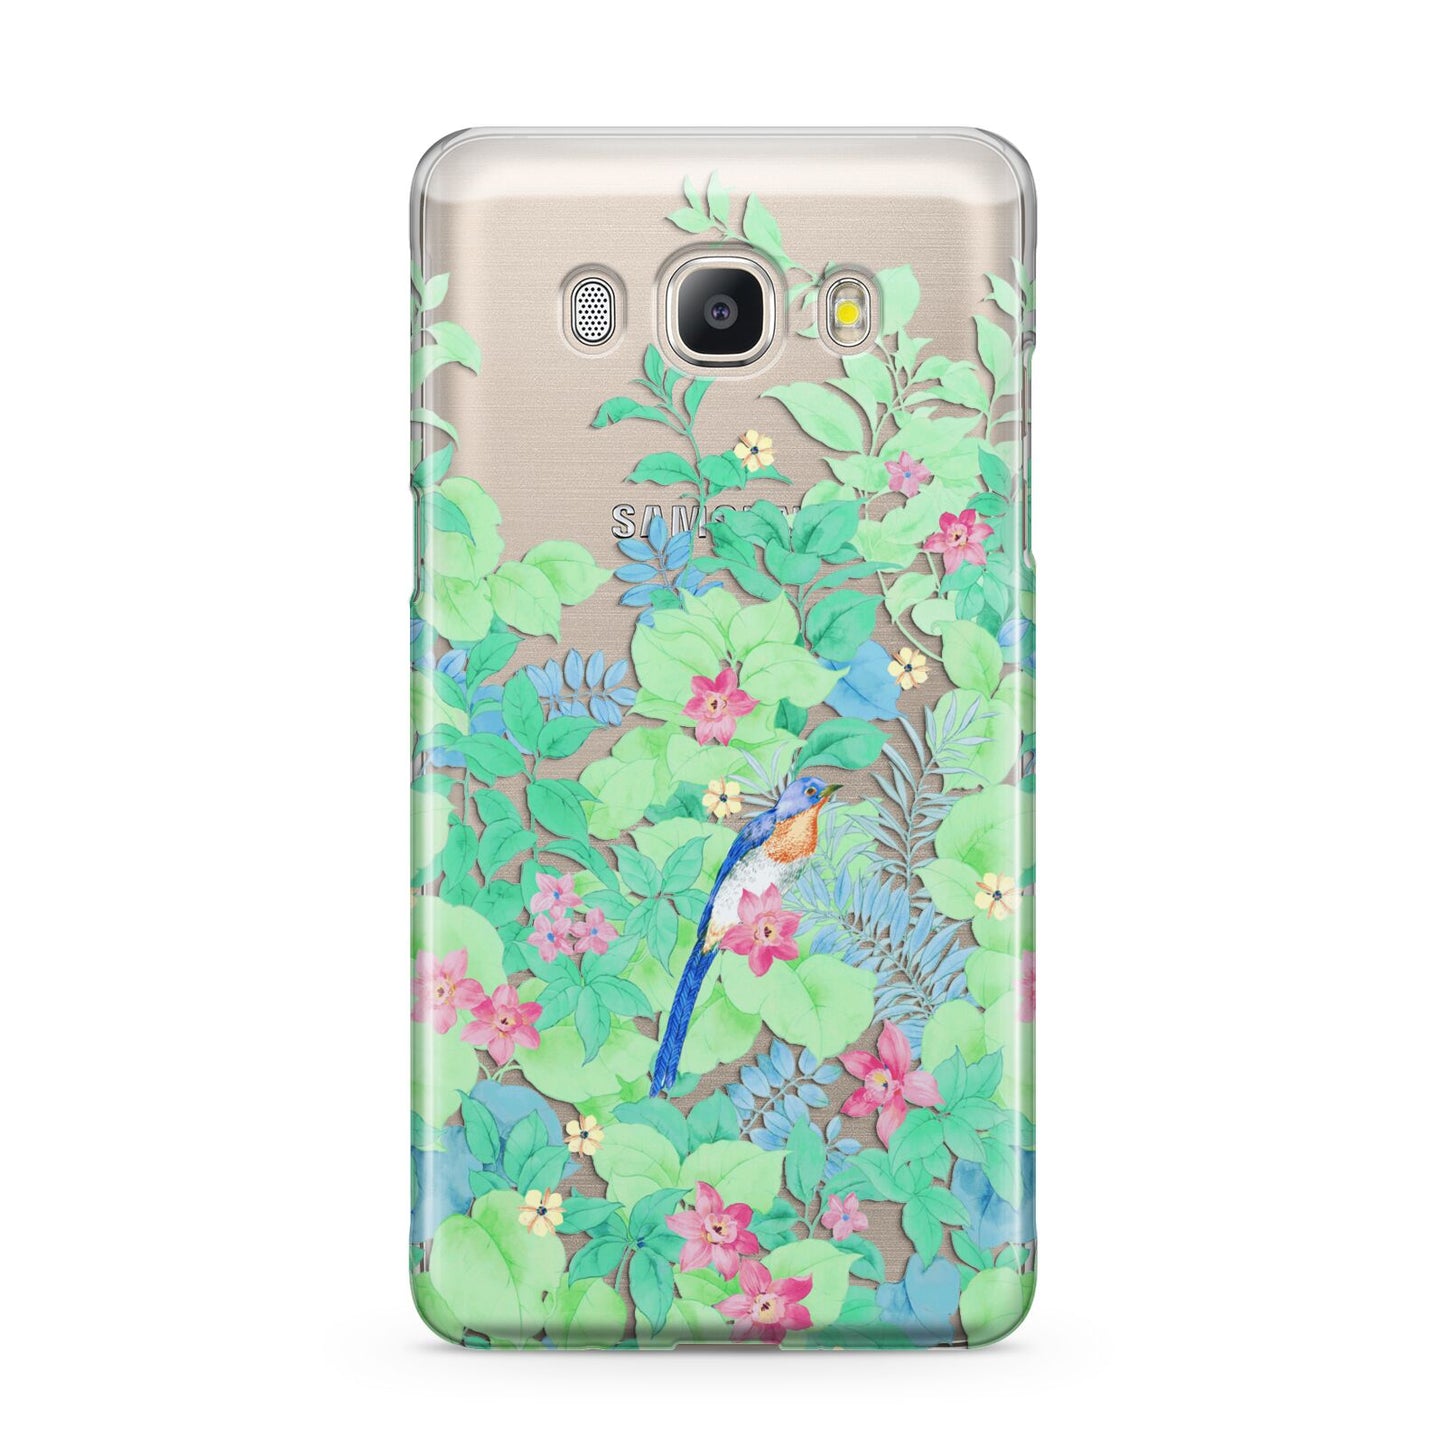 Watercolour Floral Samsung Galaxy J5 2016 Case